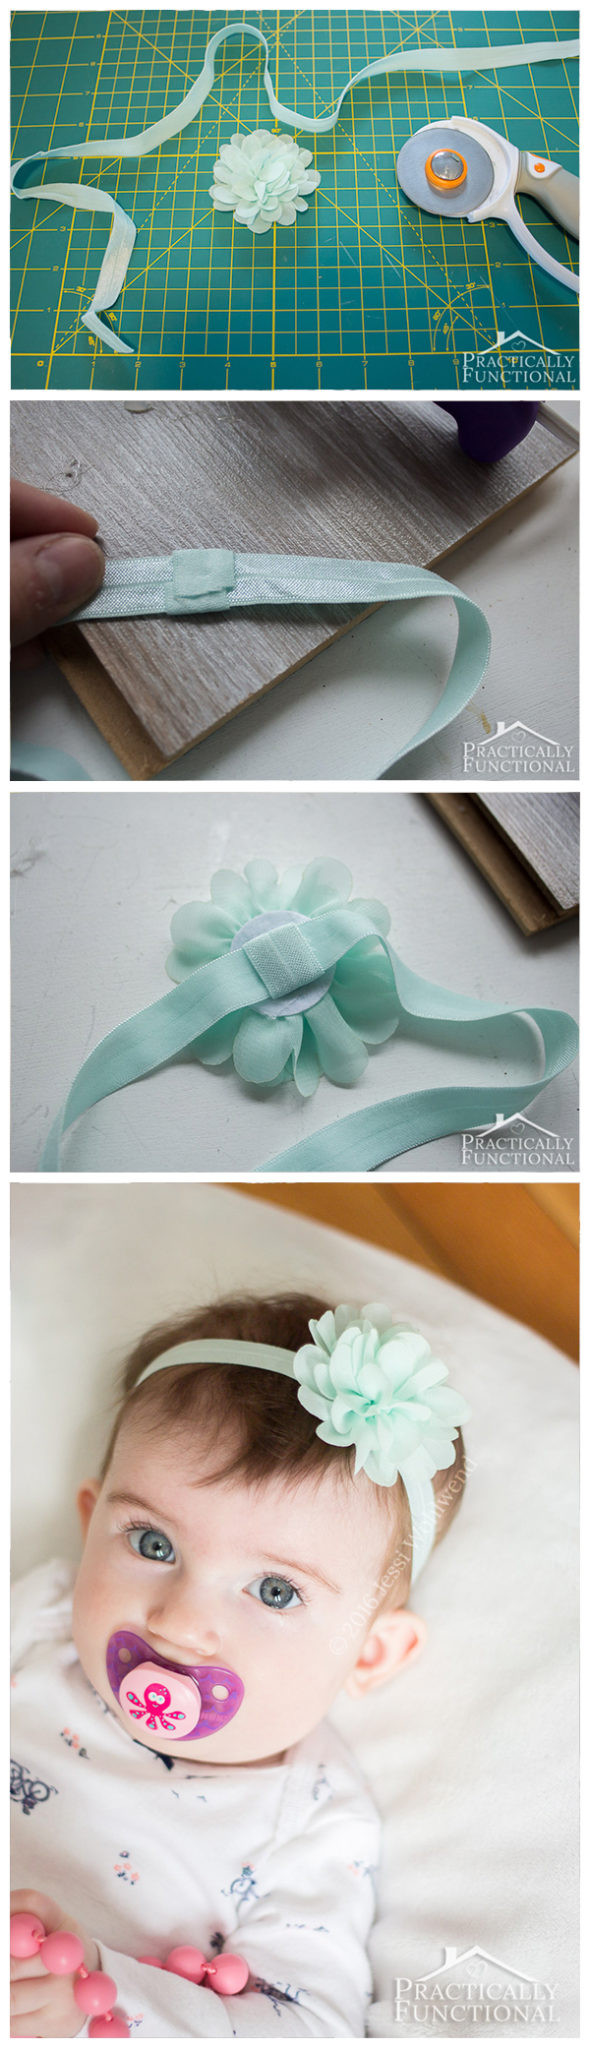 Best ideas about DIY Baby Headbands No Sew
. Save or Pin DIY No Sew Baby Flower Headbands Now.